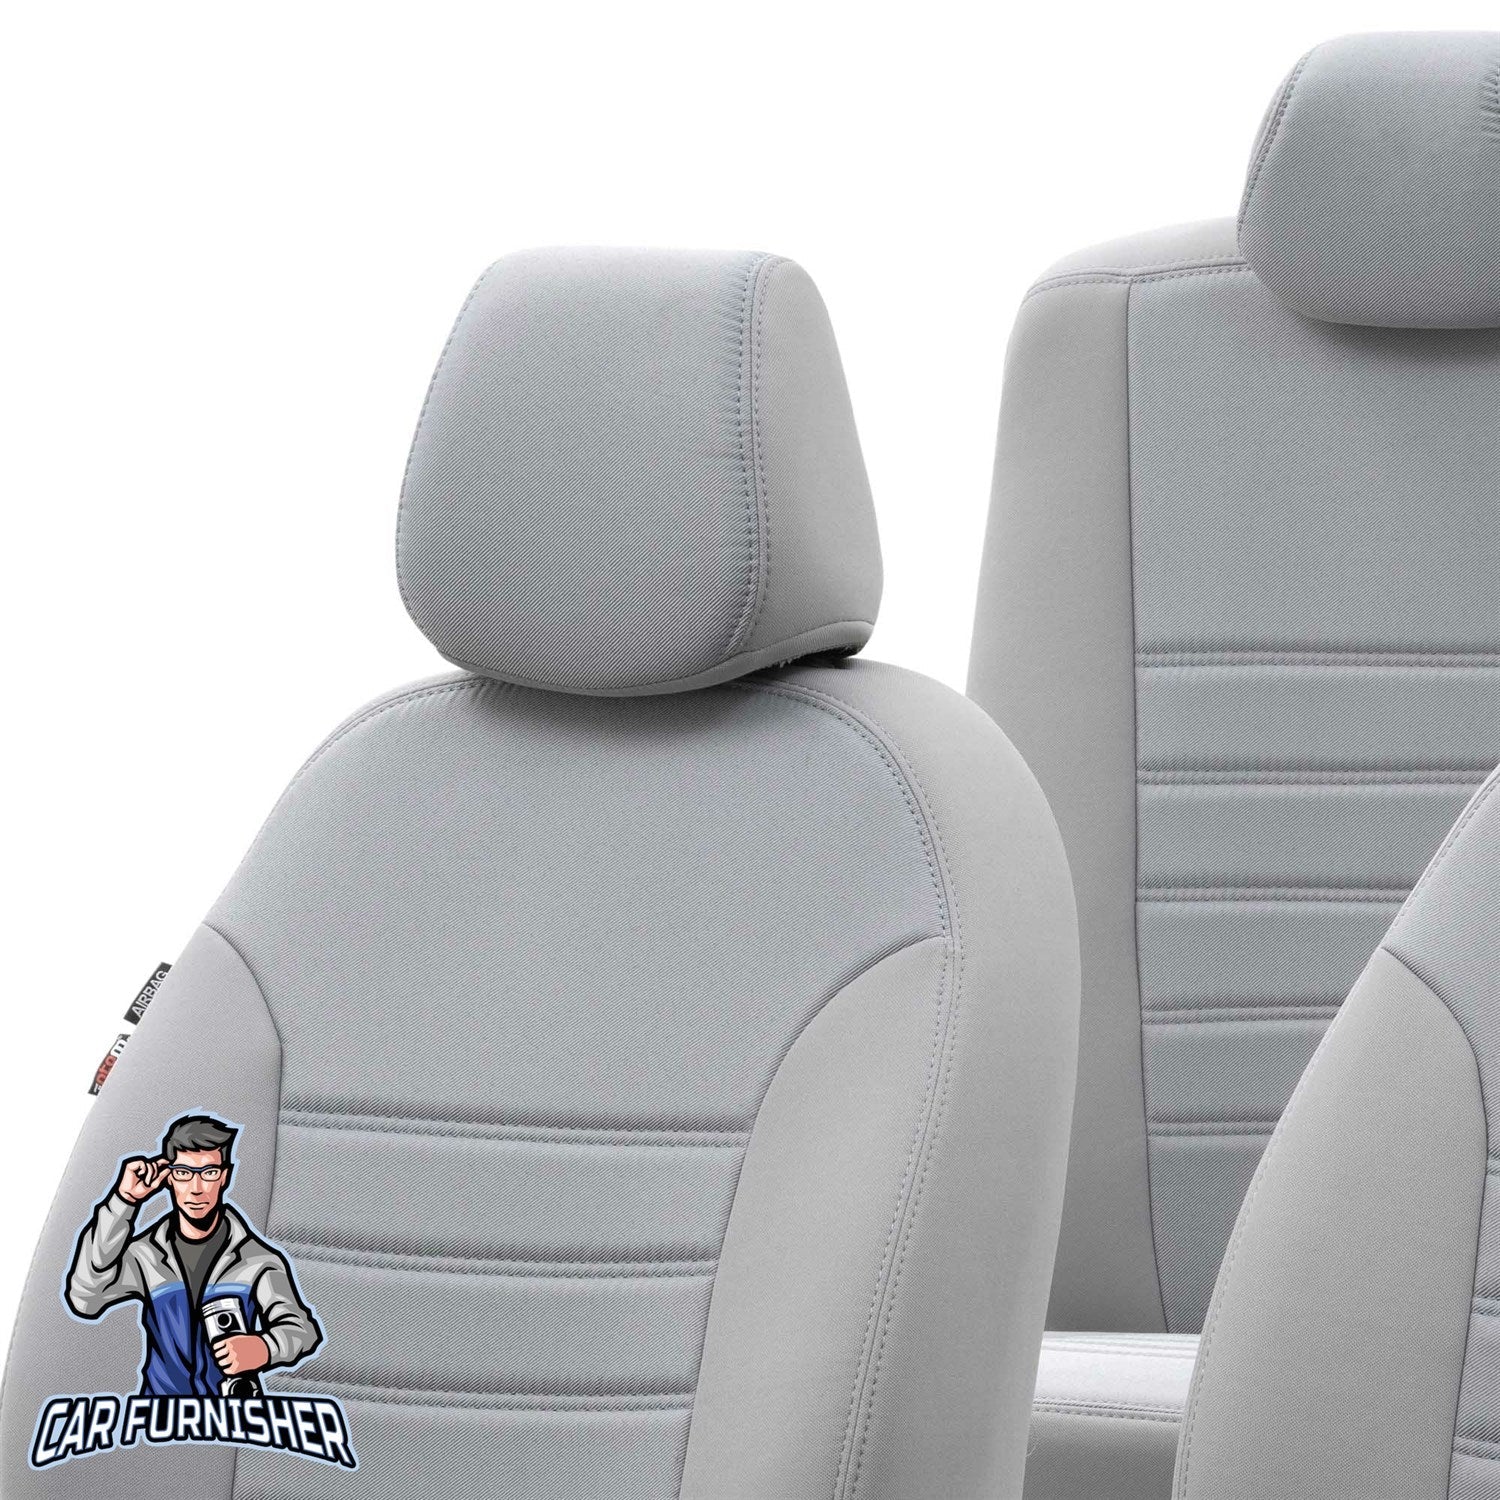 Toyota Hilux Seat Cover Original Jacquard Design Dark Beige Jacquard Fabric